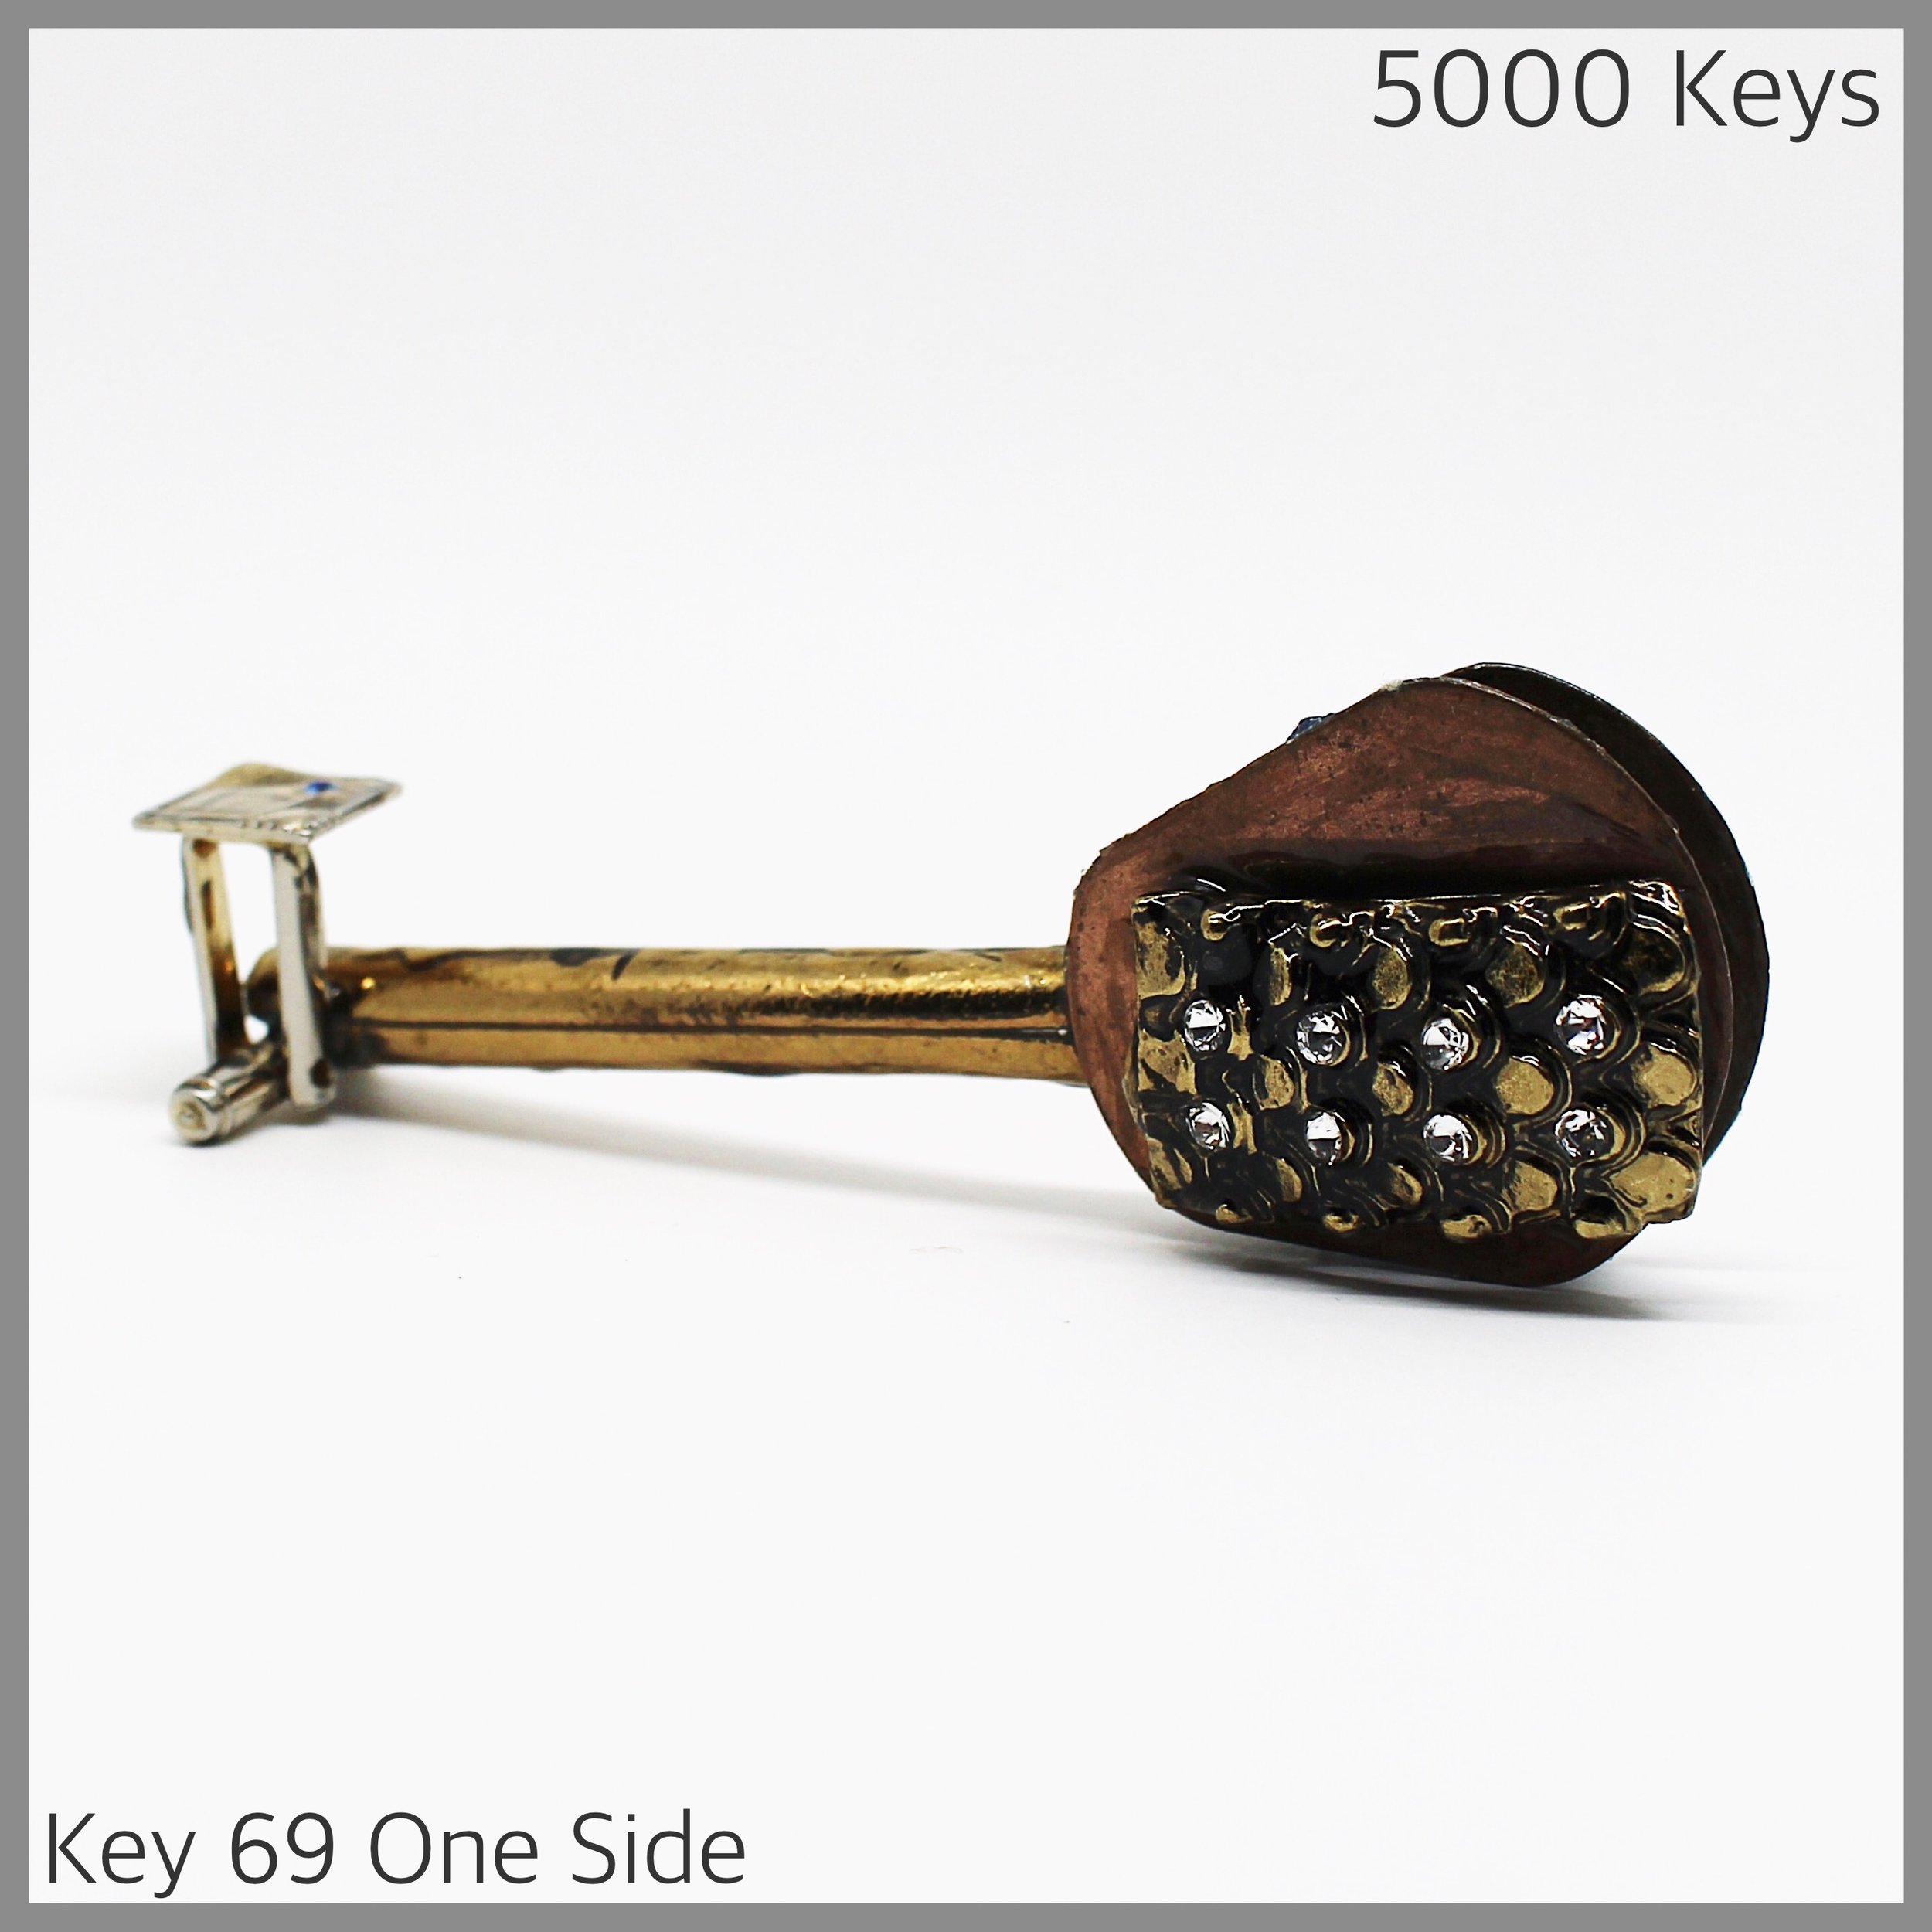 Key 69 one side - 1.JPG